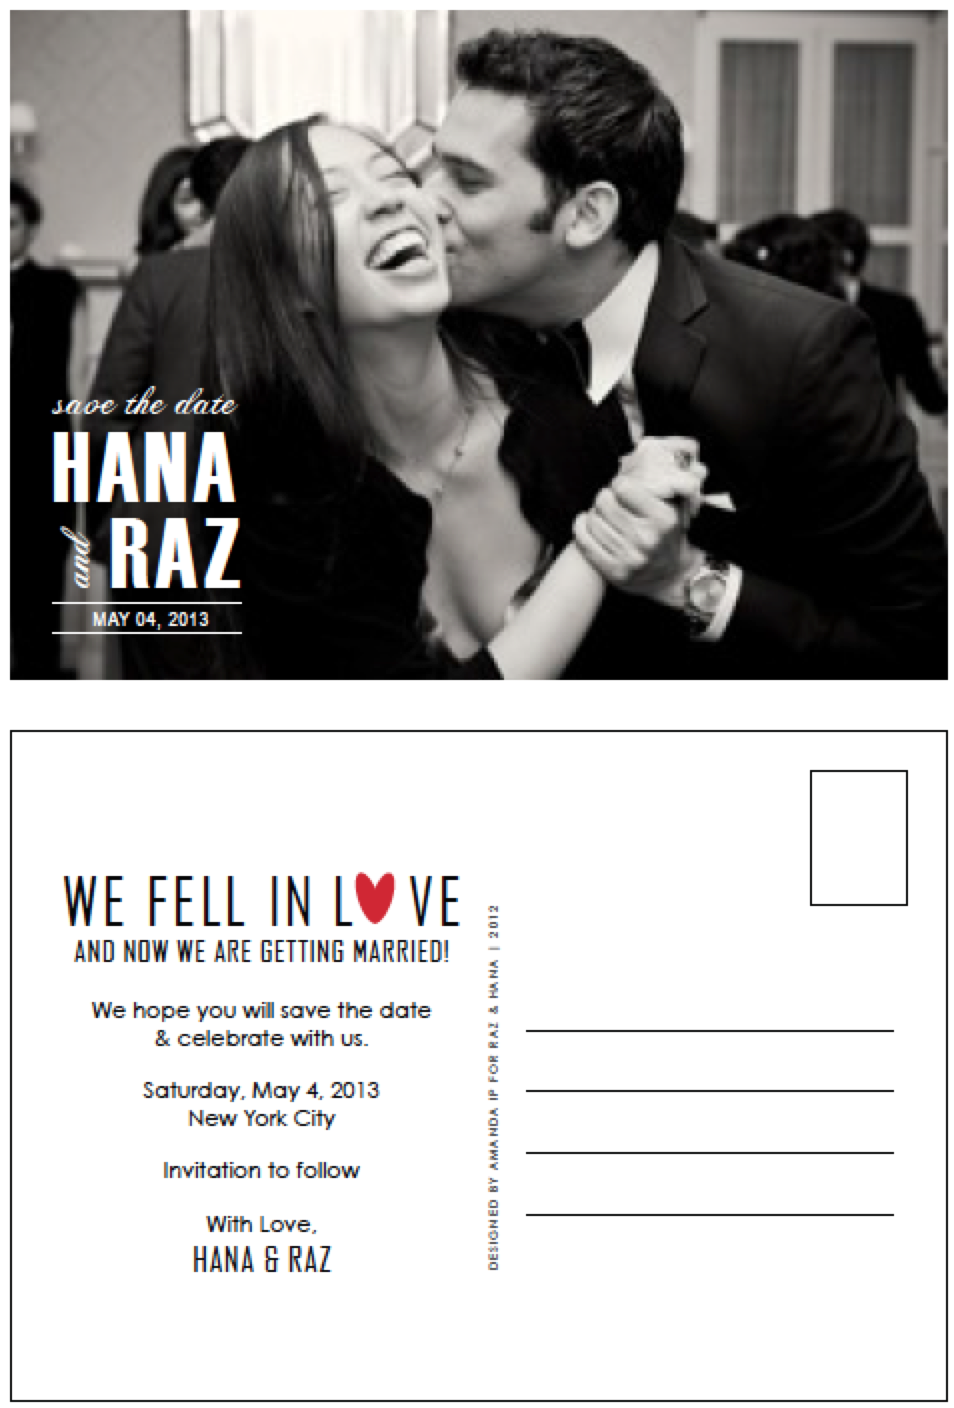 HANA & RAZ: SAVE THE DATE